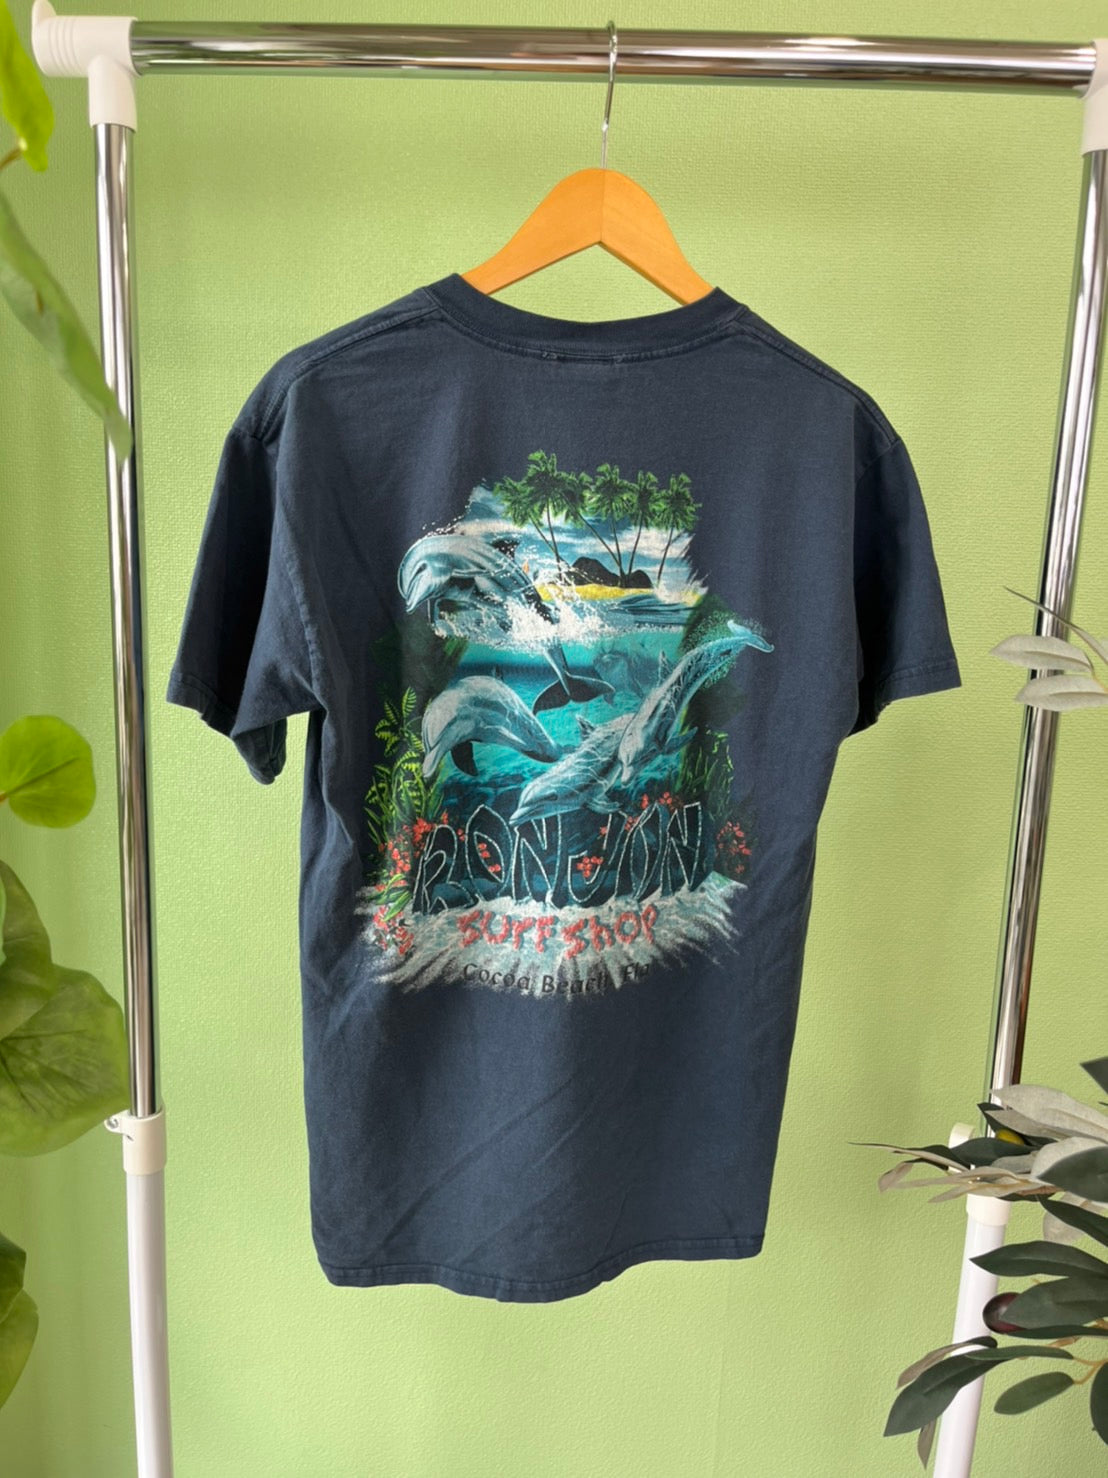 【RON JON】00's RonJon Surf Shop COCOA BEACH Y2K T-Shirt  （men's M)